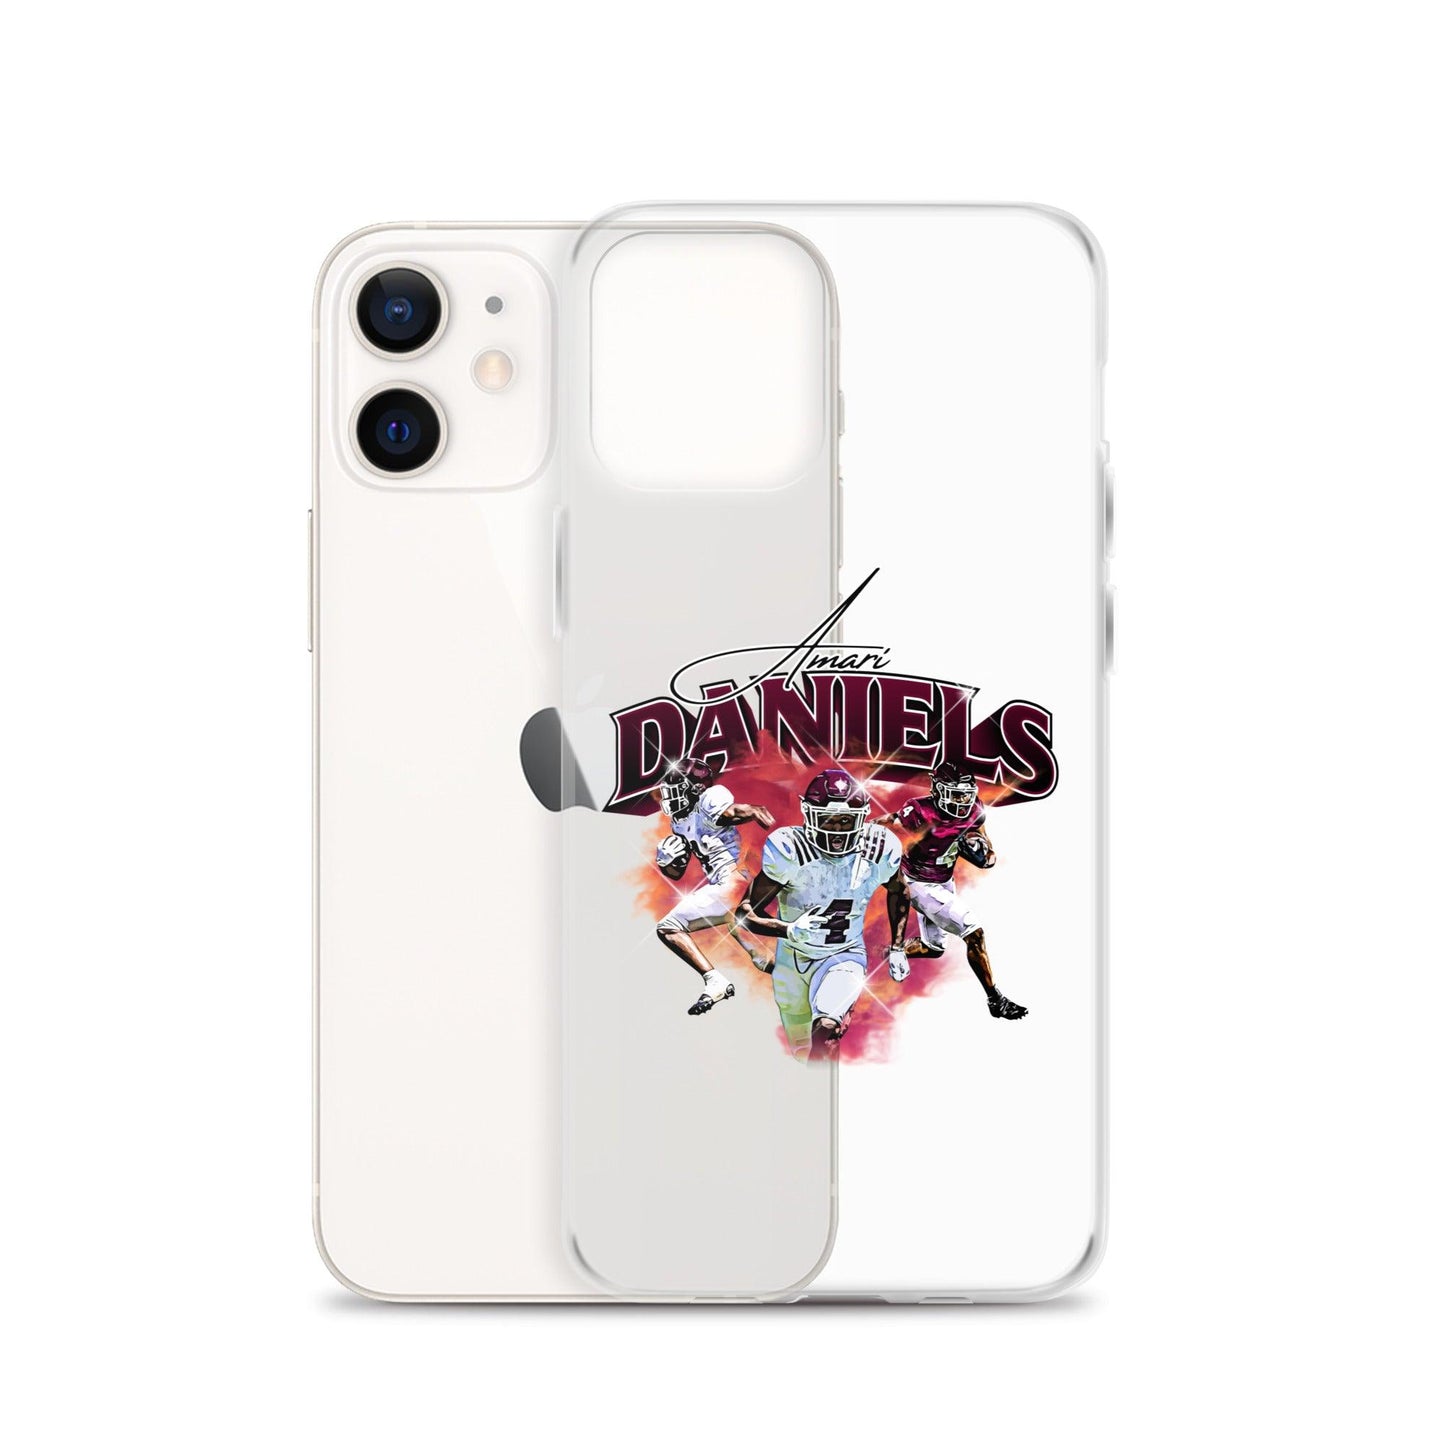 Amari Daniels "Legacy" iPhone Case - Fan Arch